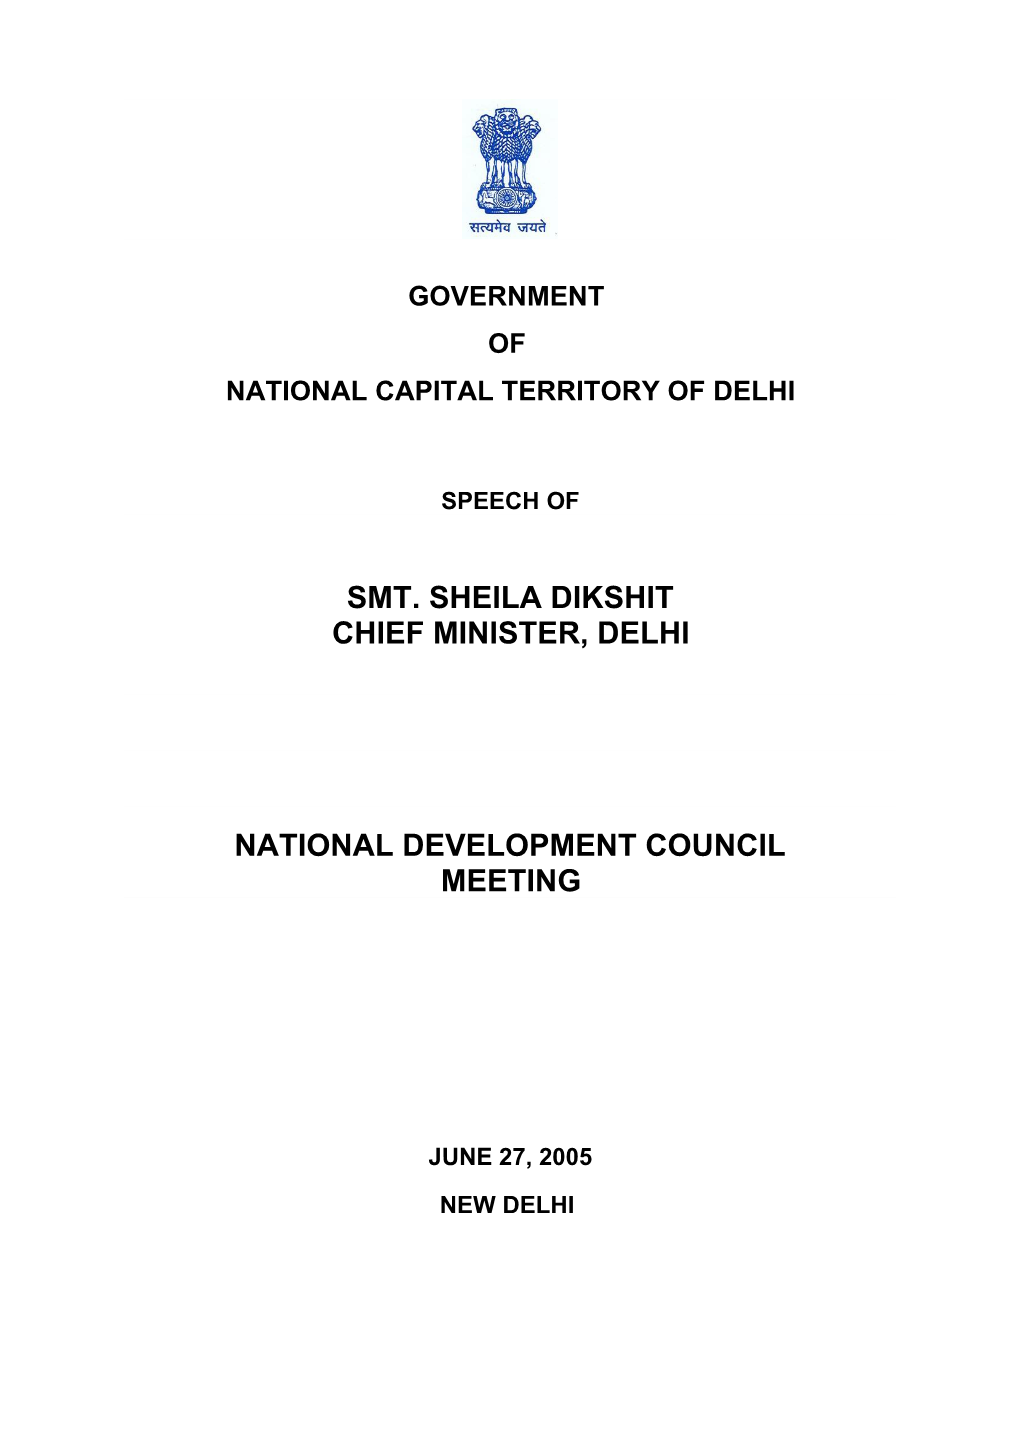 Smt. Sheila Dikshit Chief Minister, Delhi